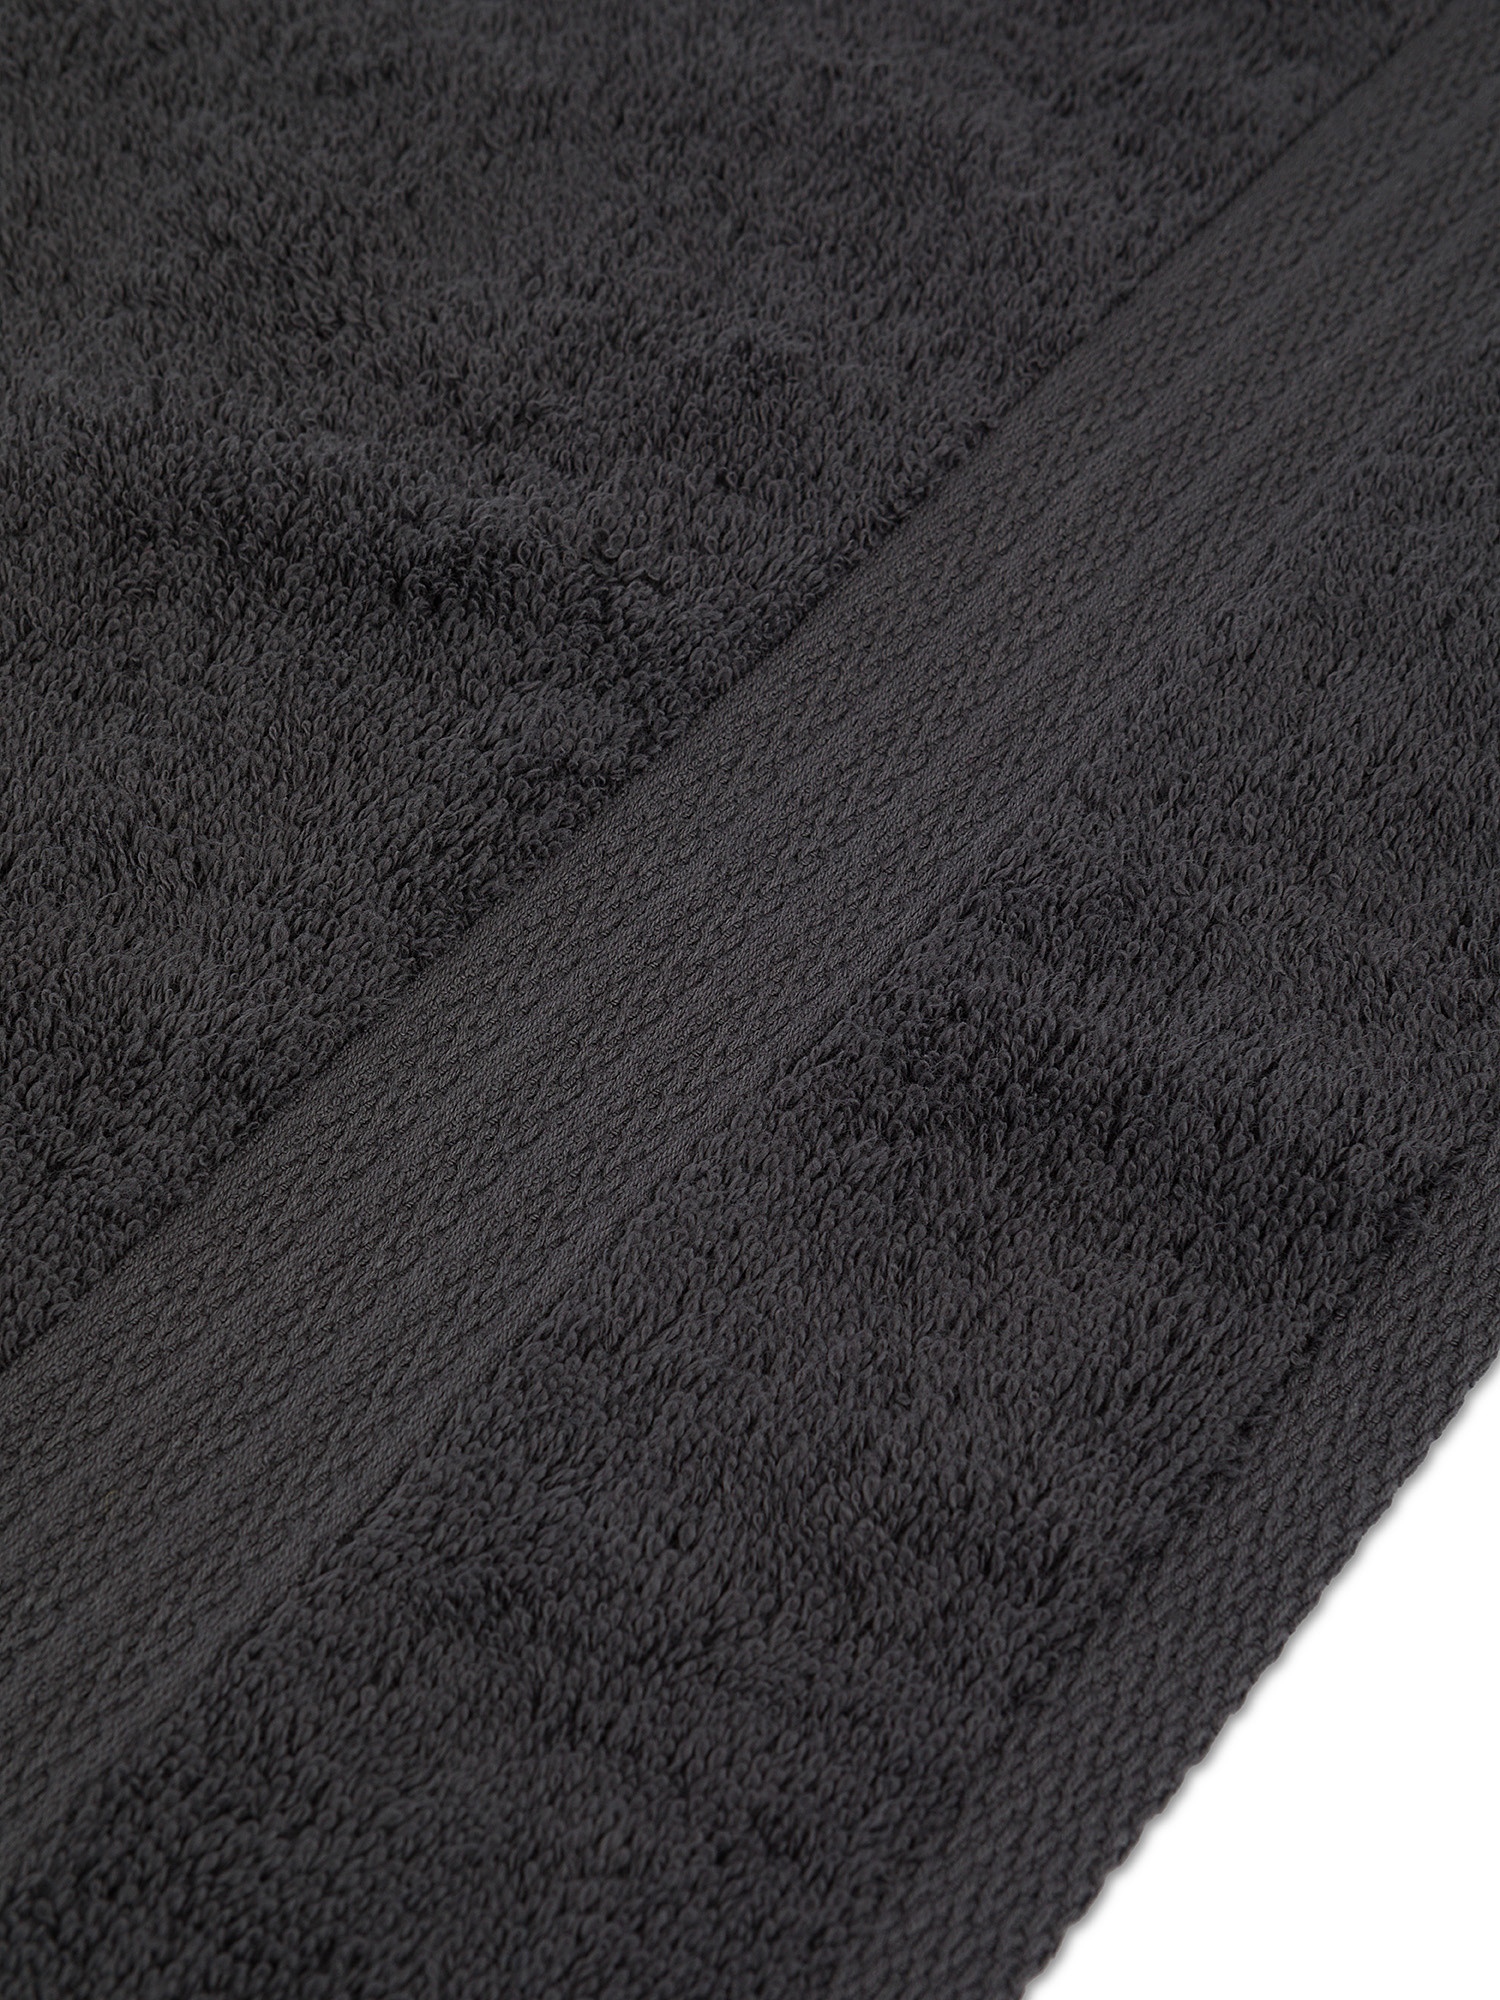 Zefiro solid color 100% cotton towel, Dark Grey, large image number 2